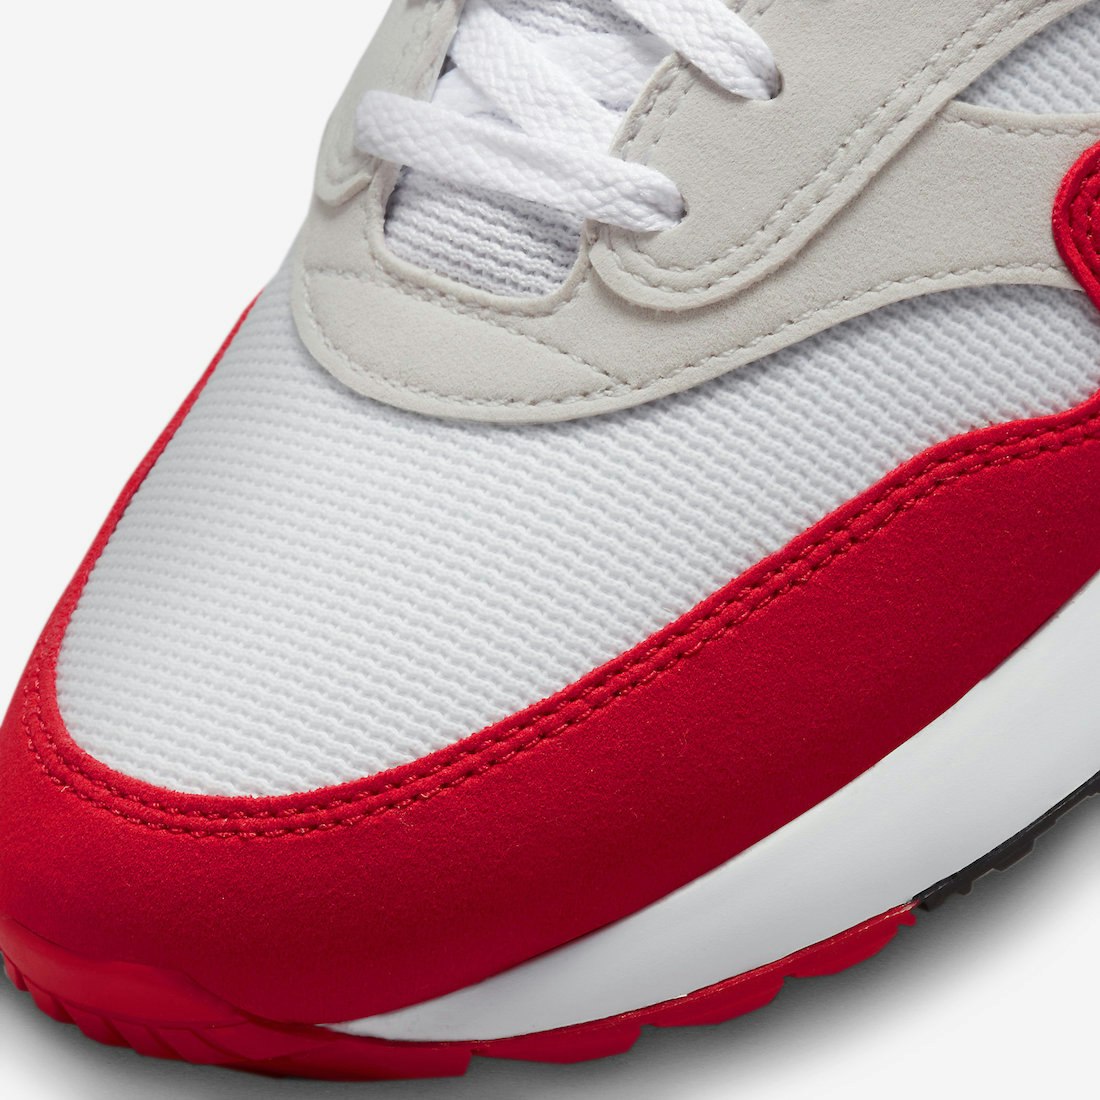 Nike Air Max 1 Golf "Sport Red"